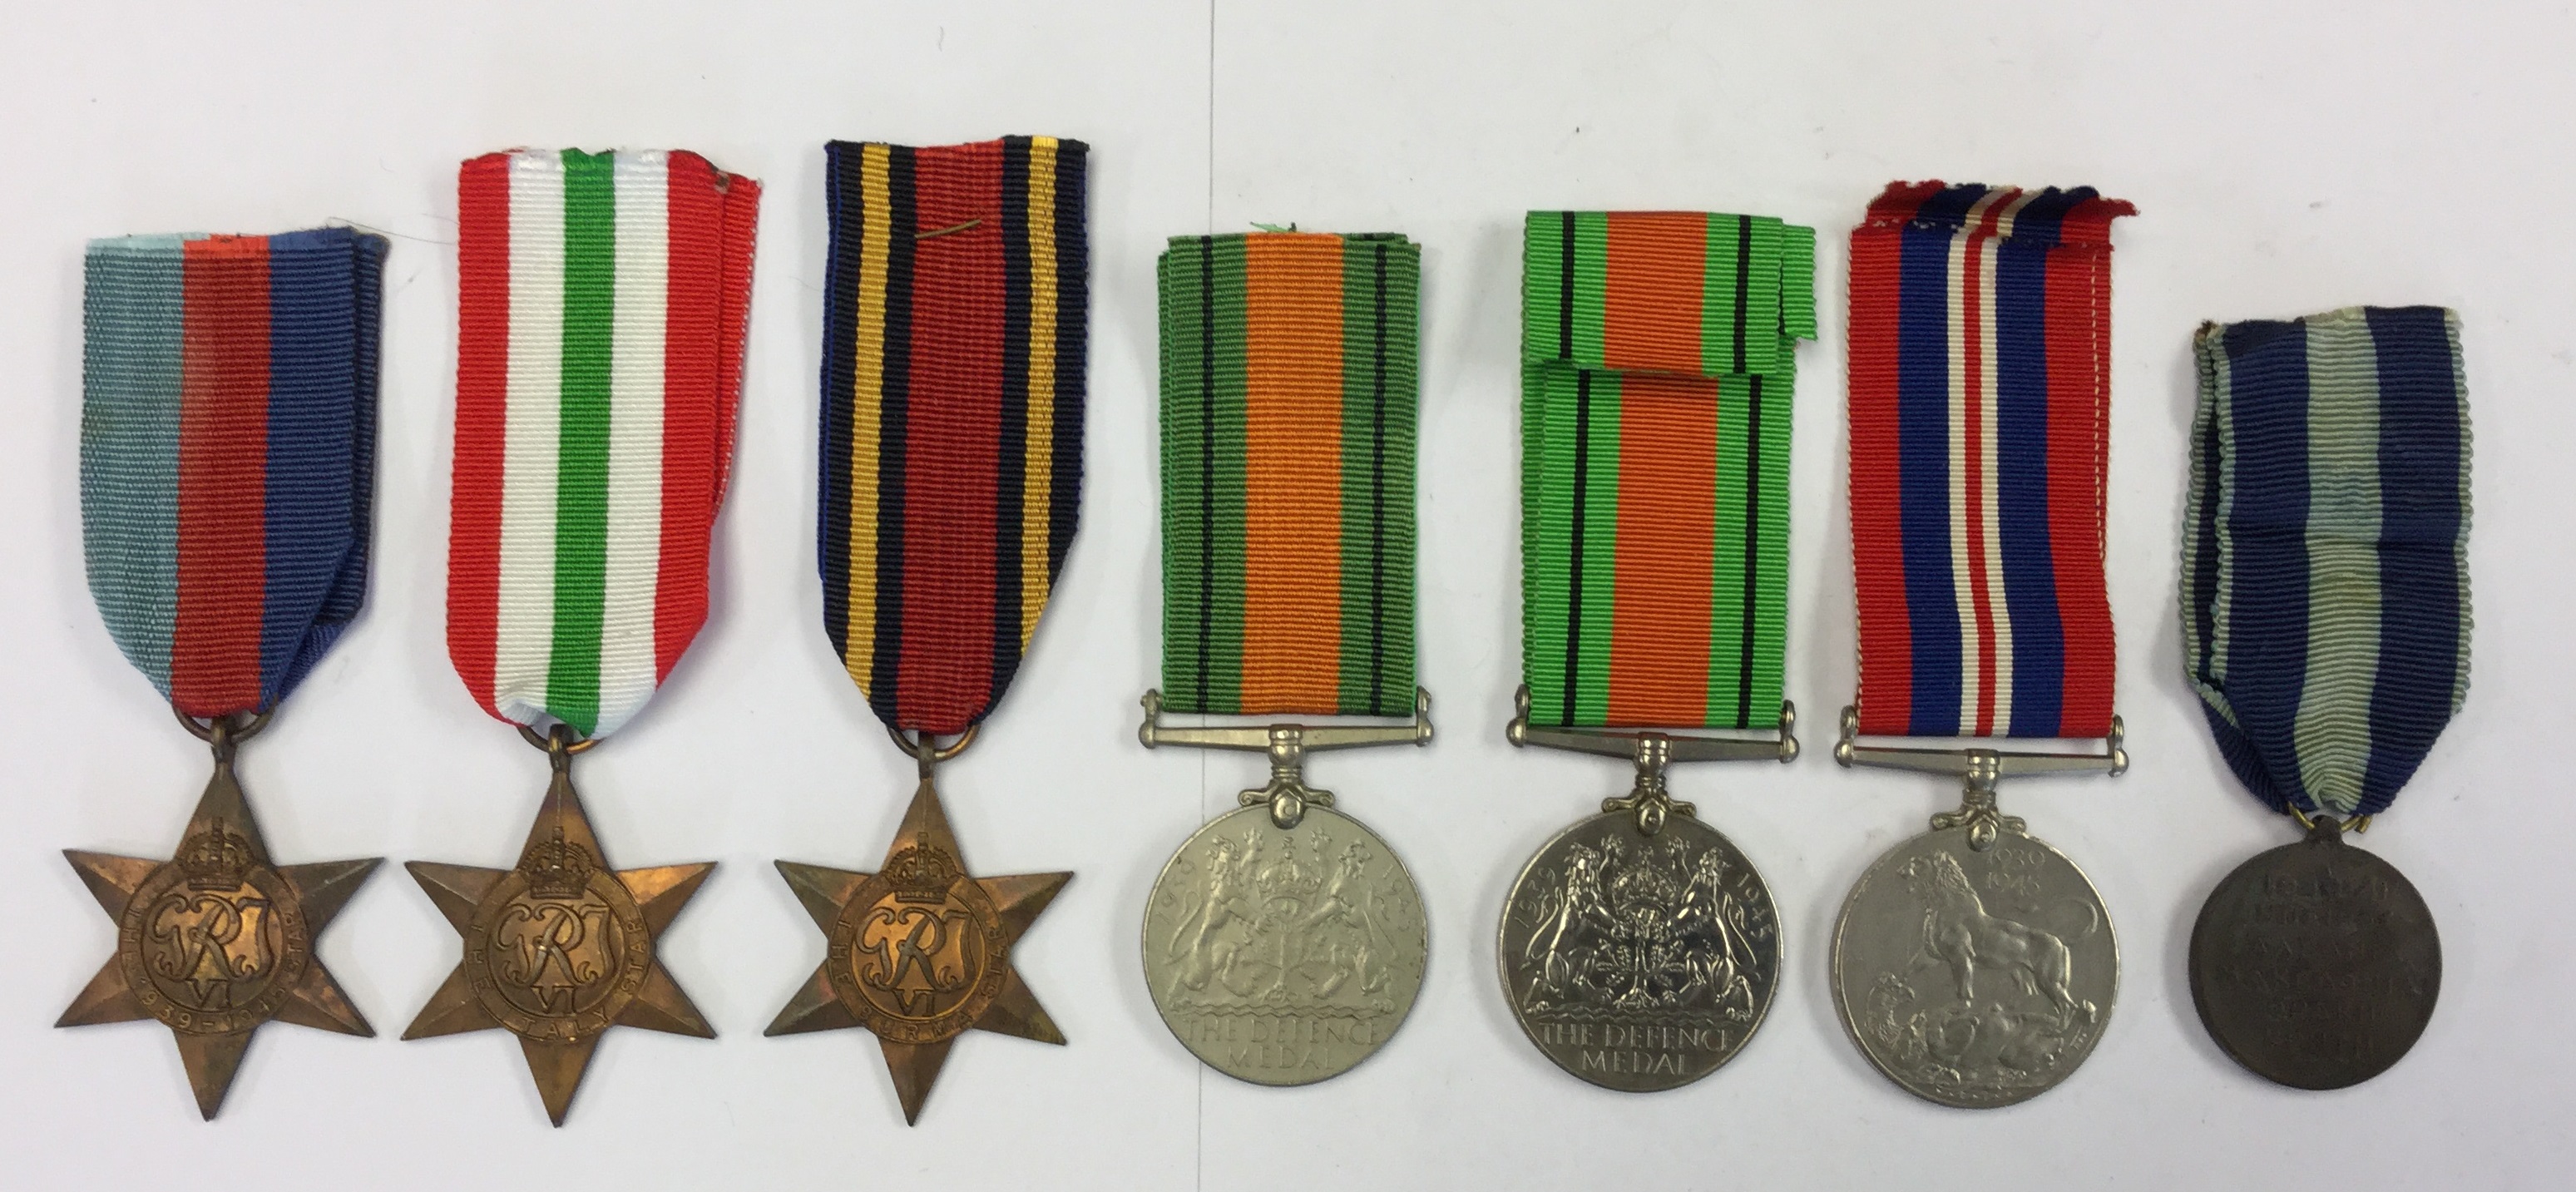 WW2 British Medals: 1939-45 Star, Italy Star, Burma Star, Defence medals x 2, War Medal,